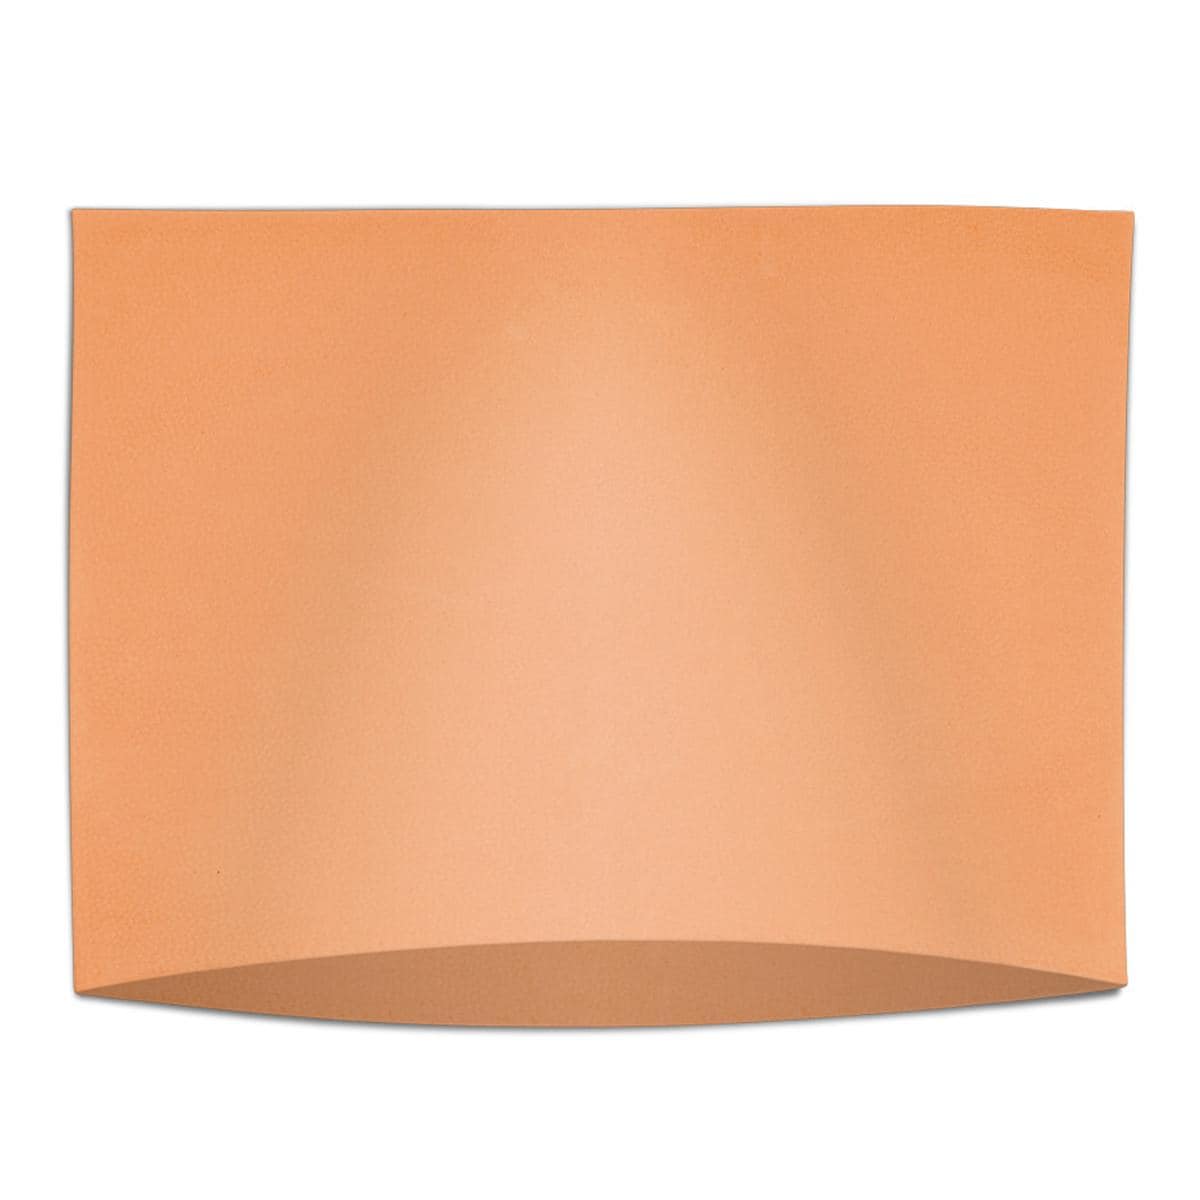 SafeBasics Hoofdsteunhoezen 25 x 33 cm - Oranje, 500 stuks